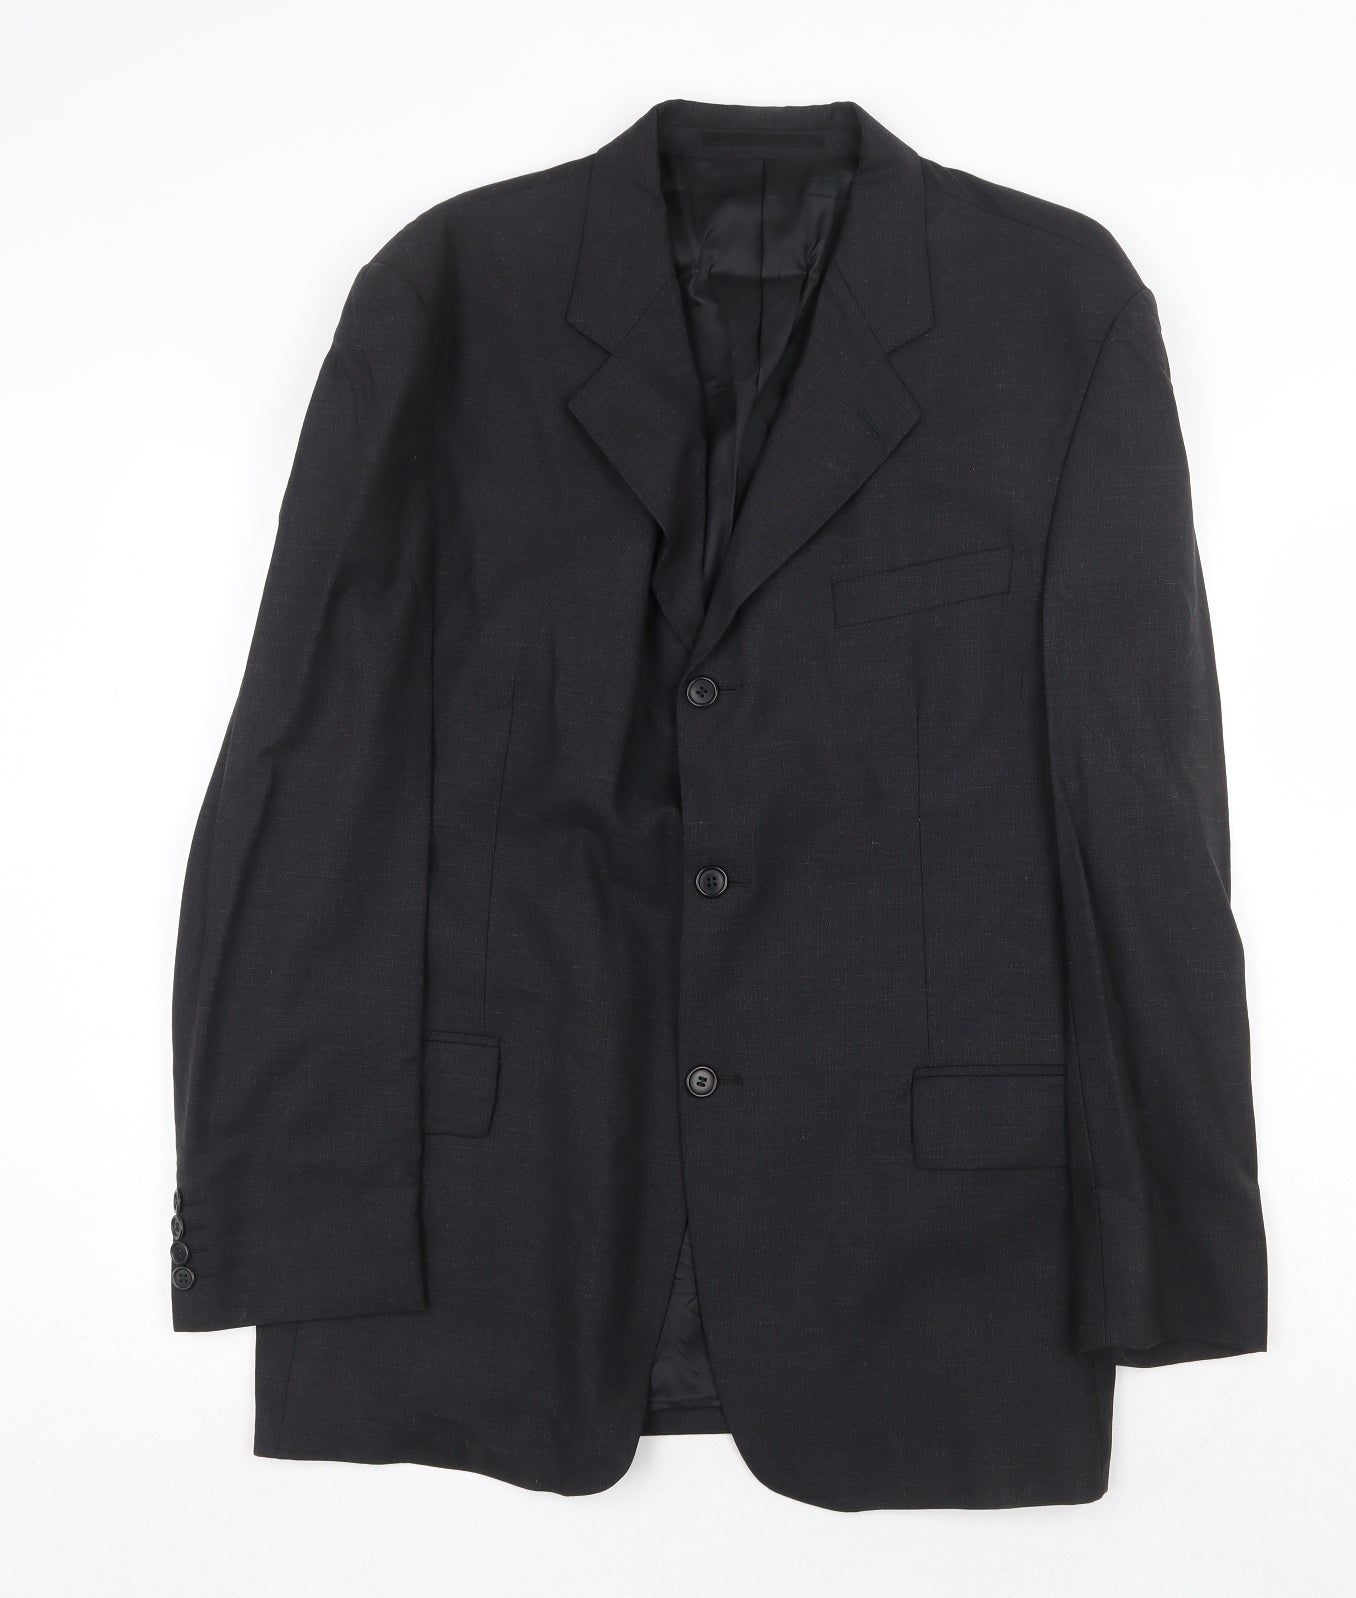 Berwin & Berwin Mens Grey Wool Jacket Suit Jacket Size 42 Regular